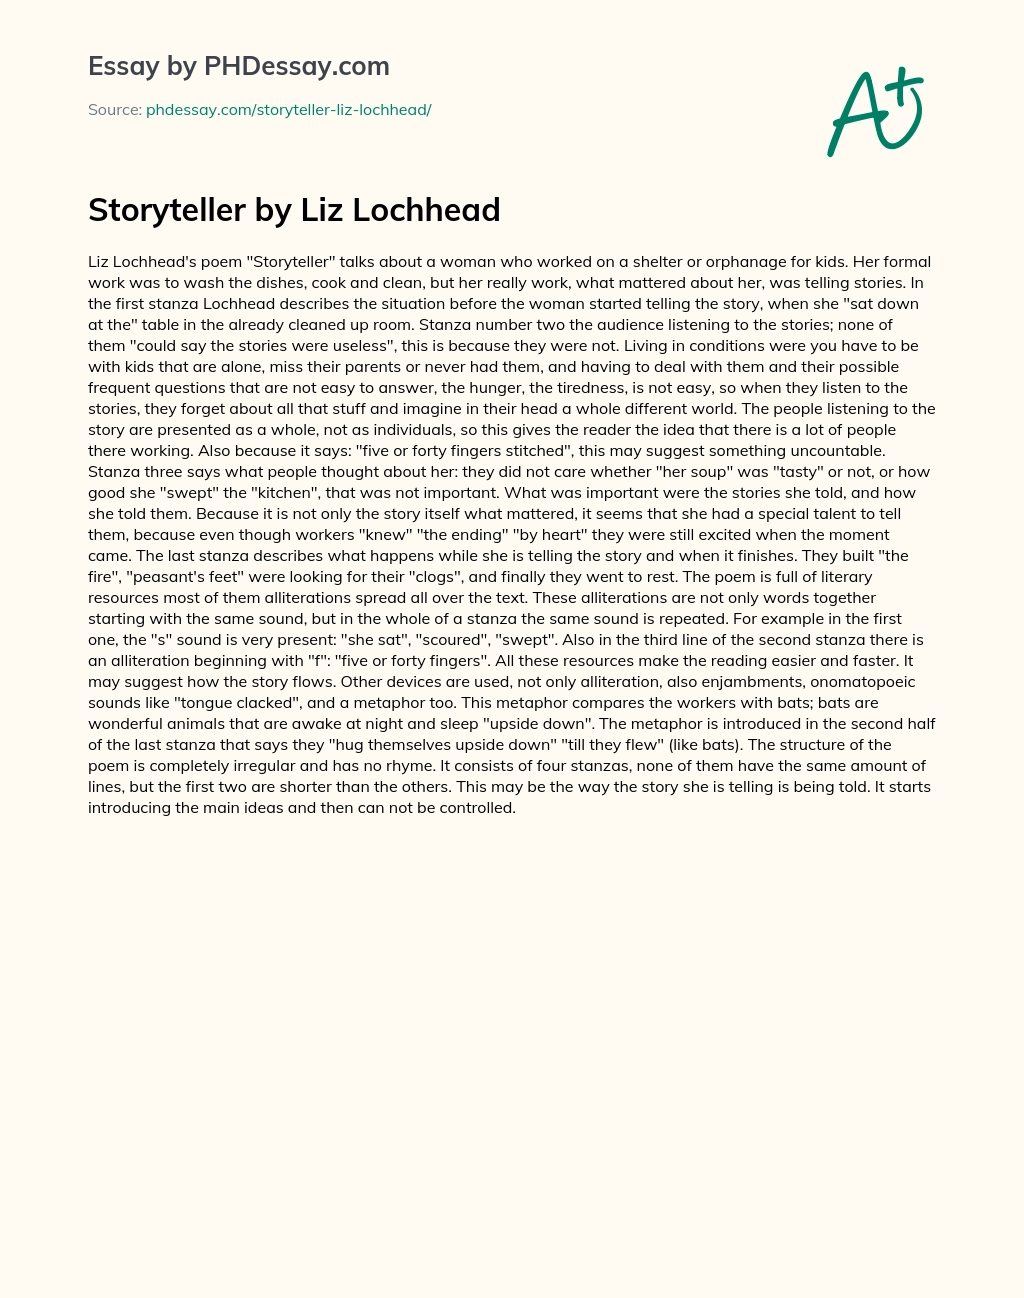 Storyteller by Liz Lochhead essay